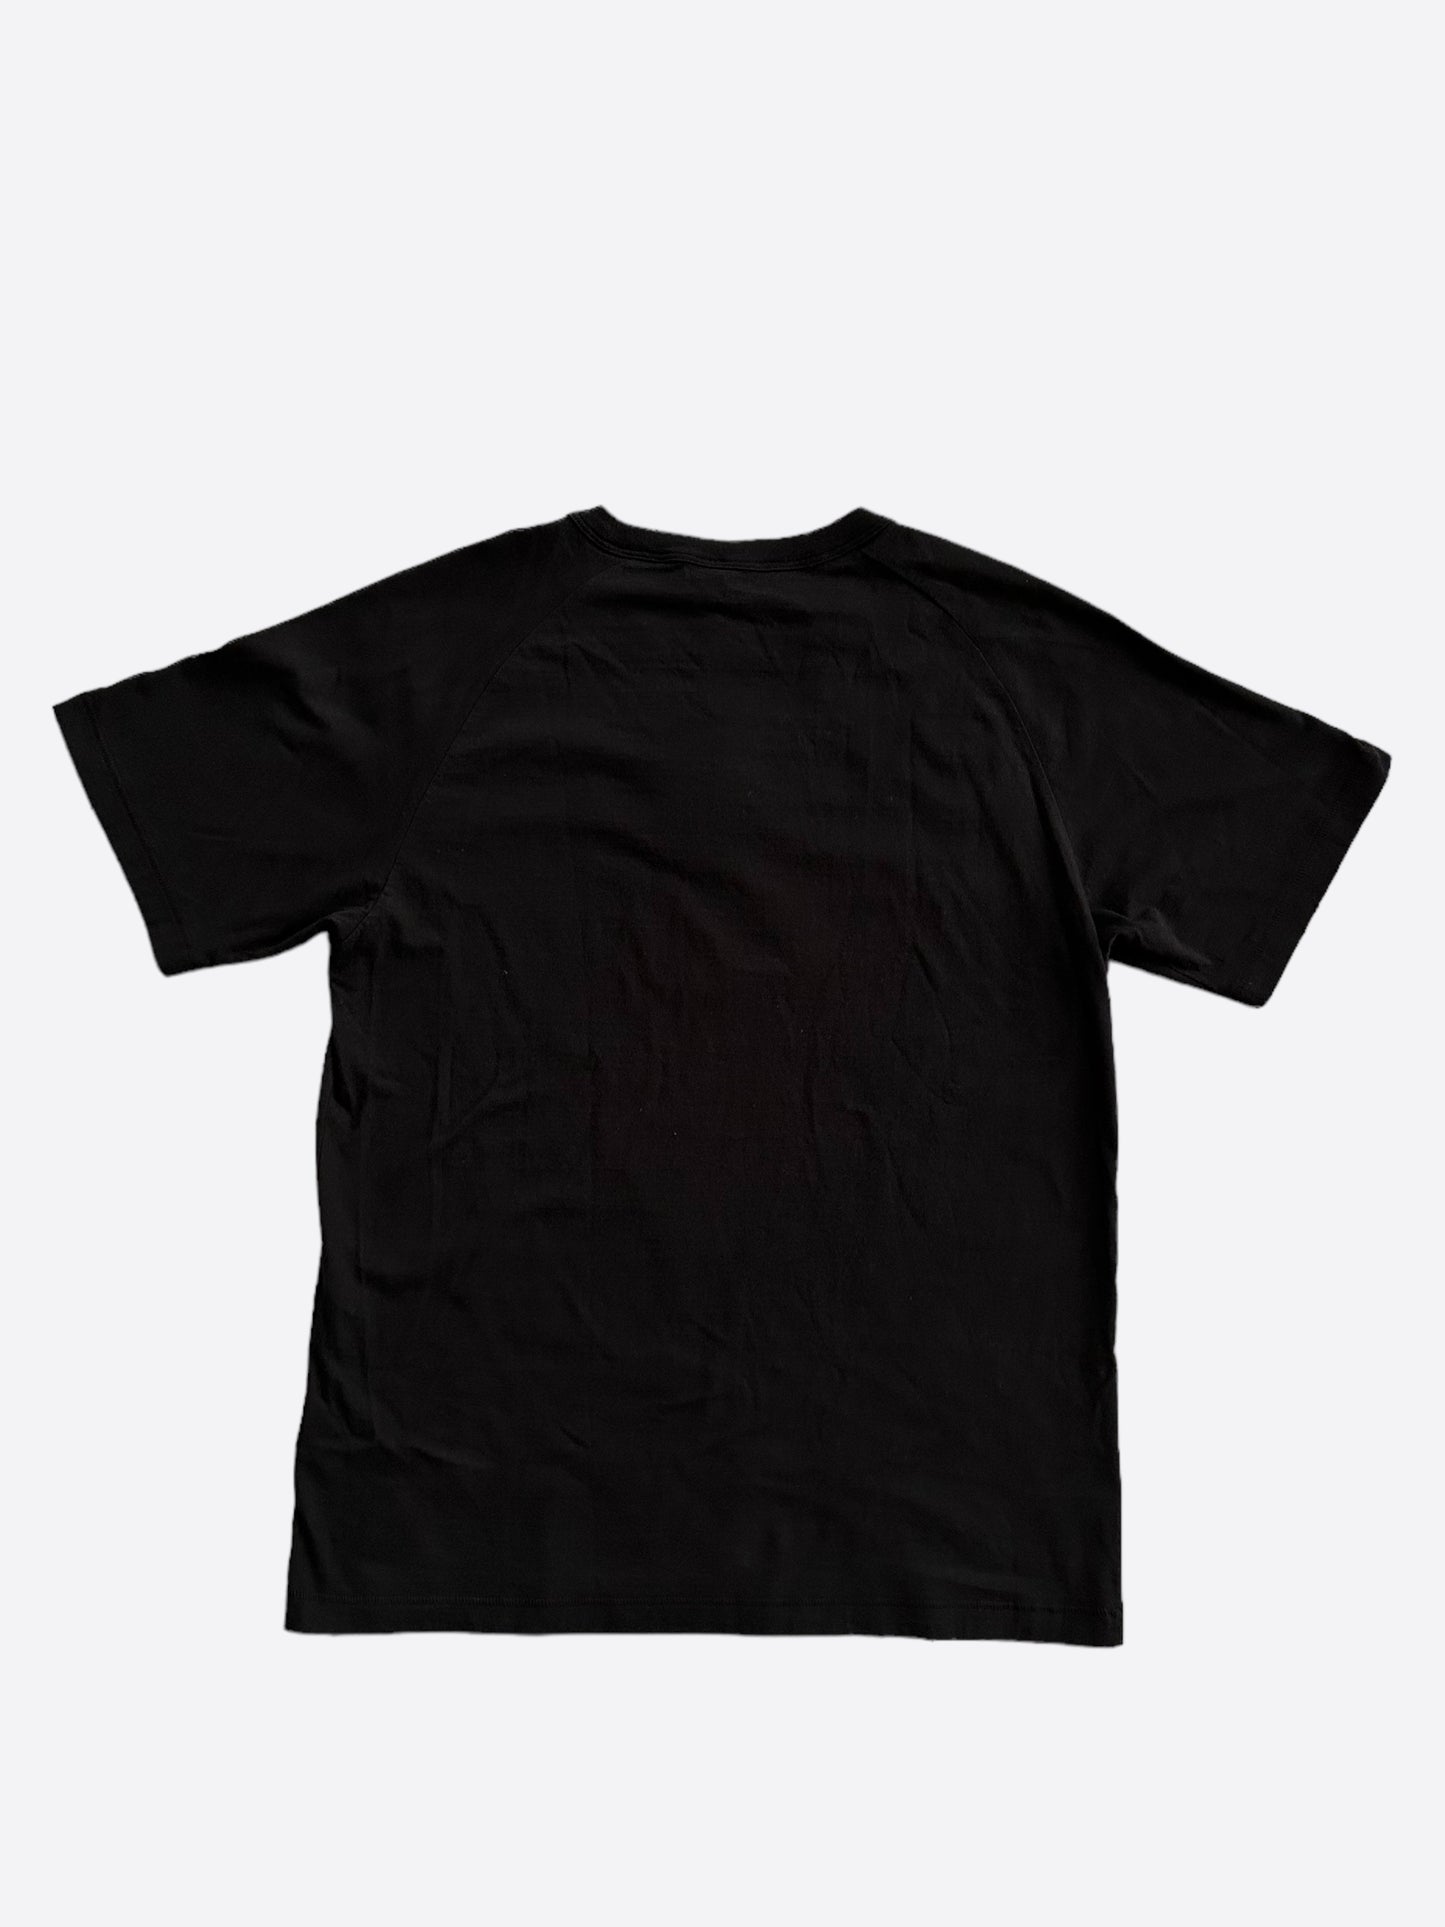 Dior ERL Black Embroidered Logo T-Shirt